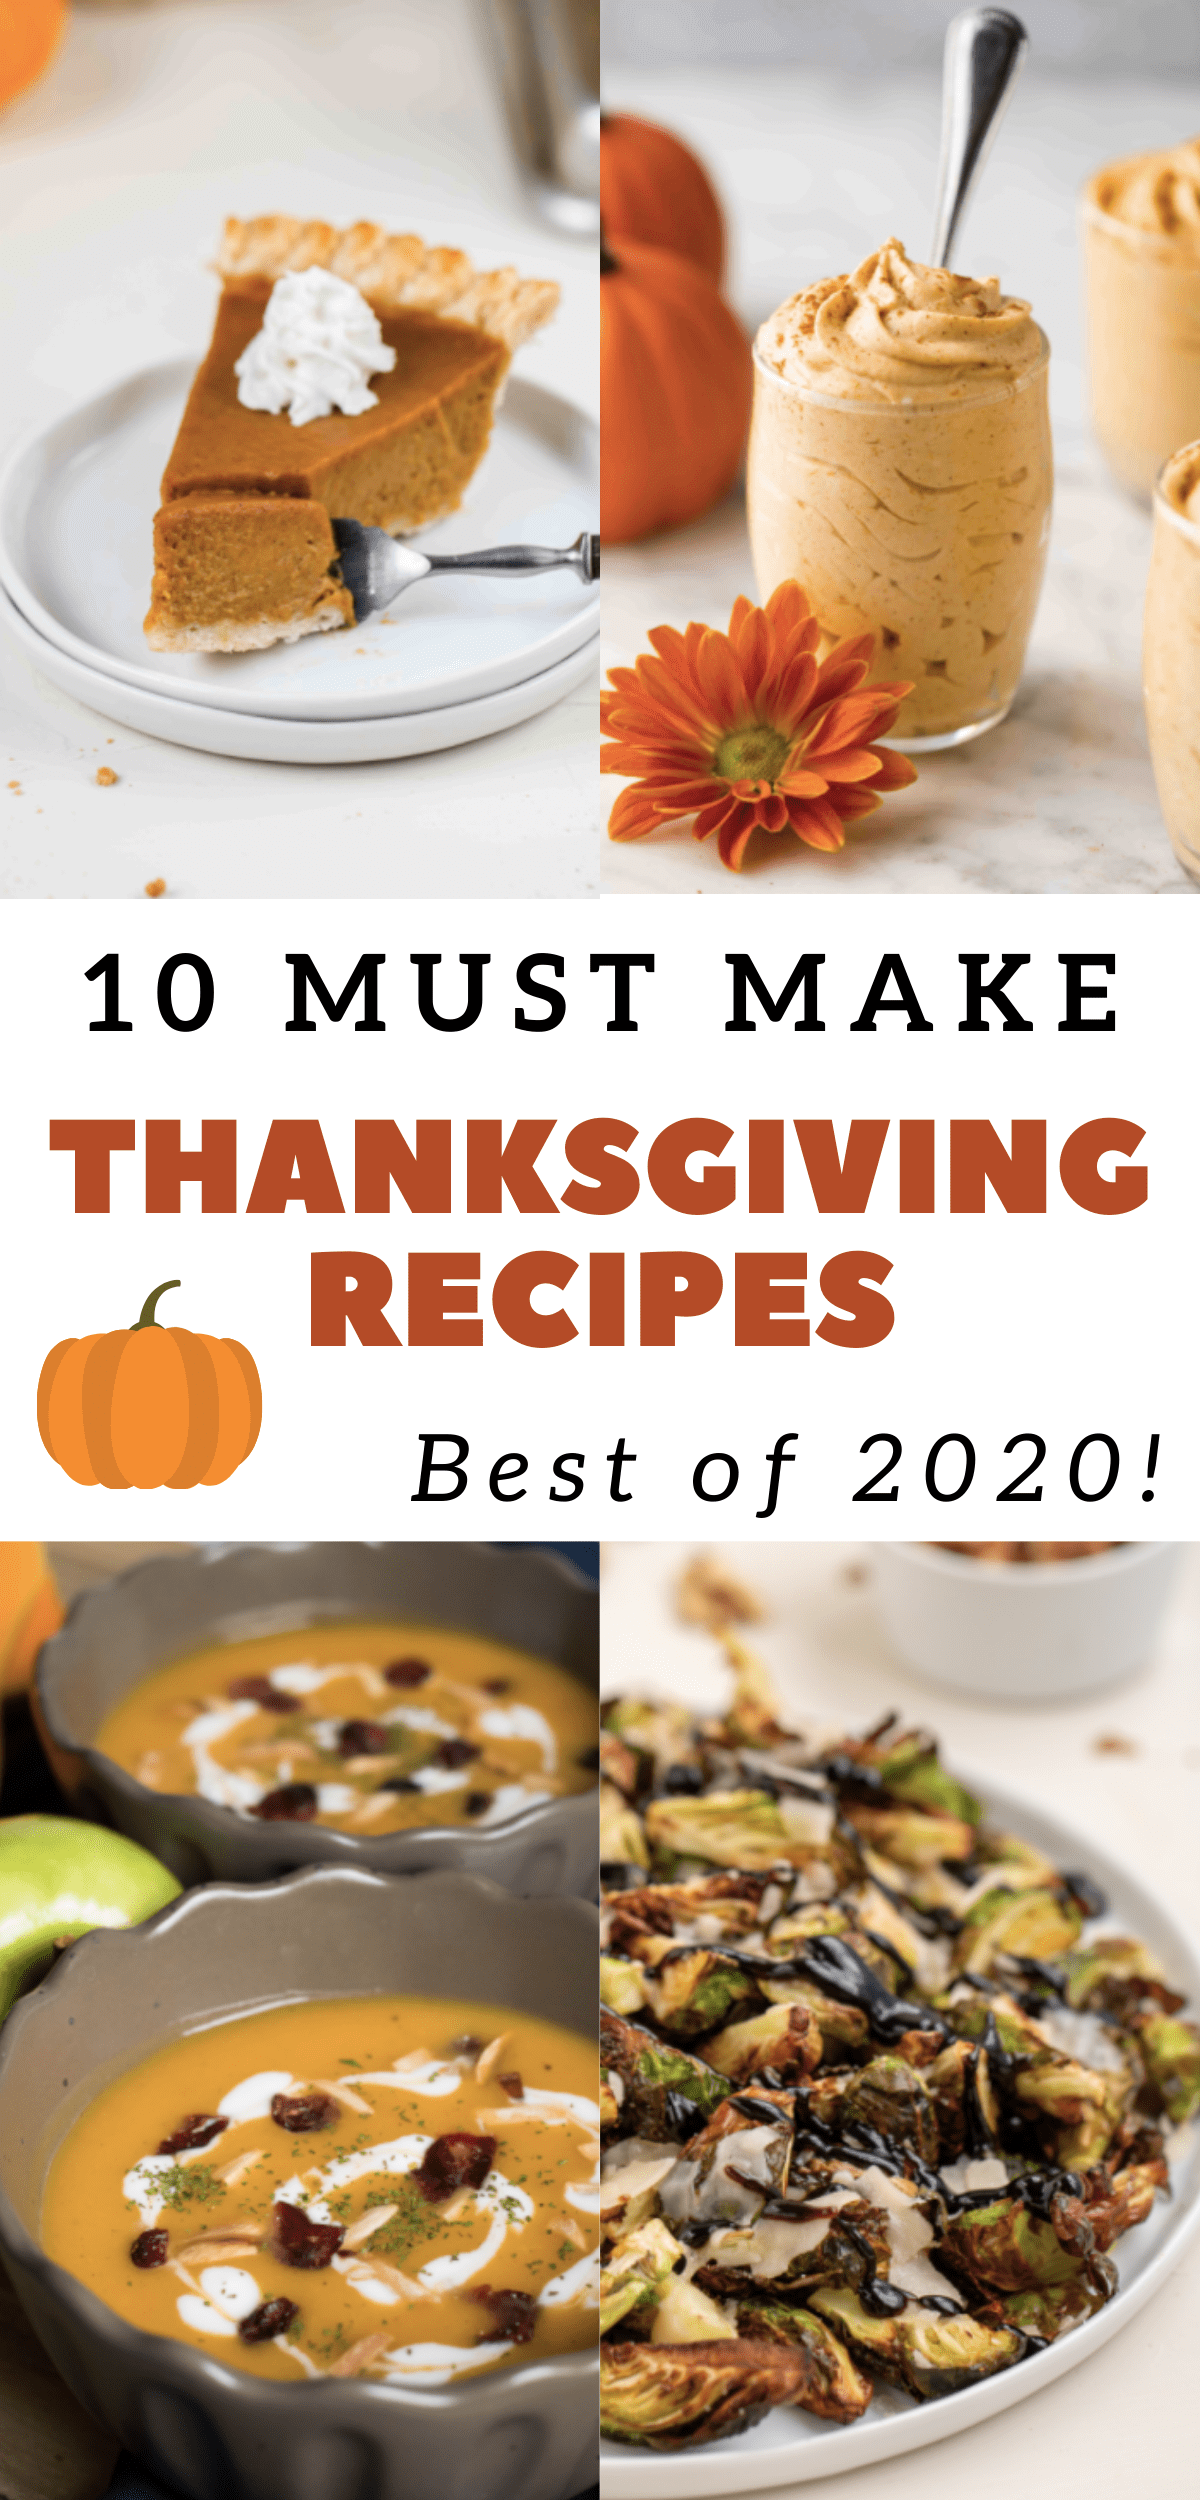 10 must make Thanksgiving recipes